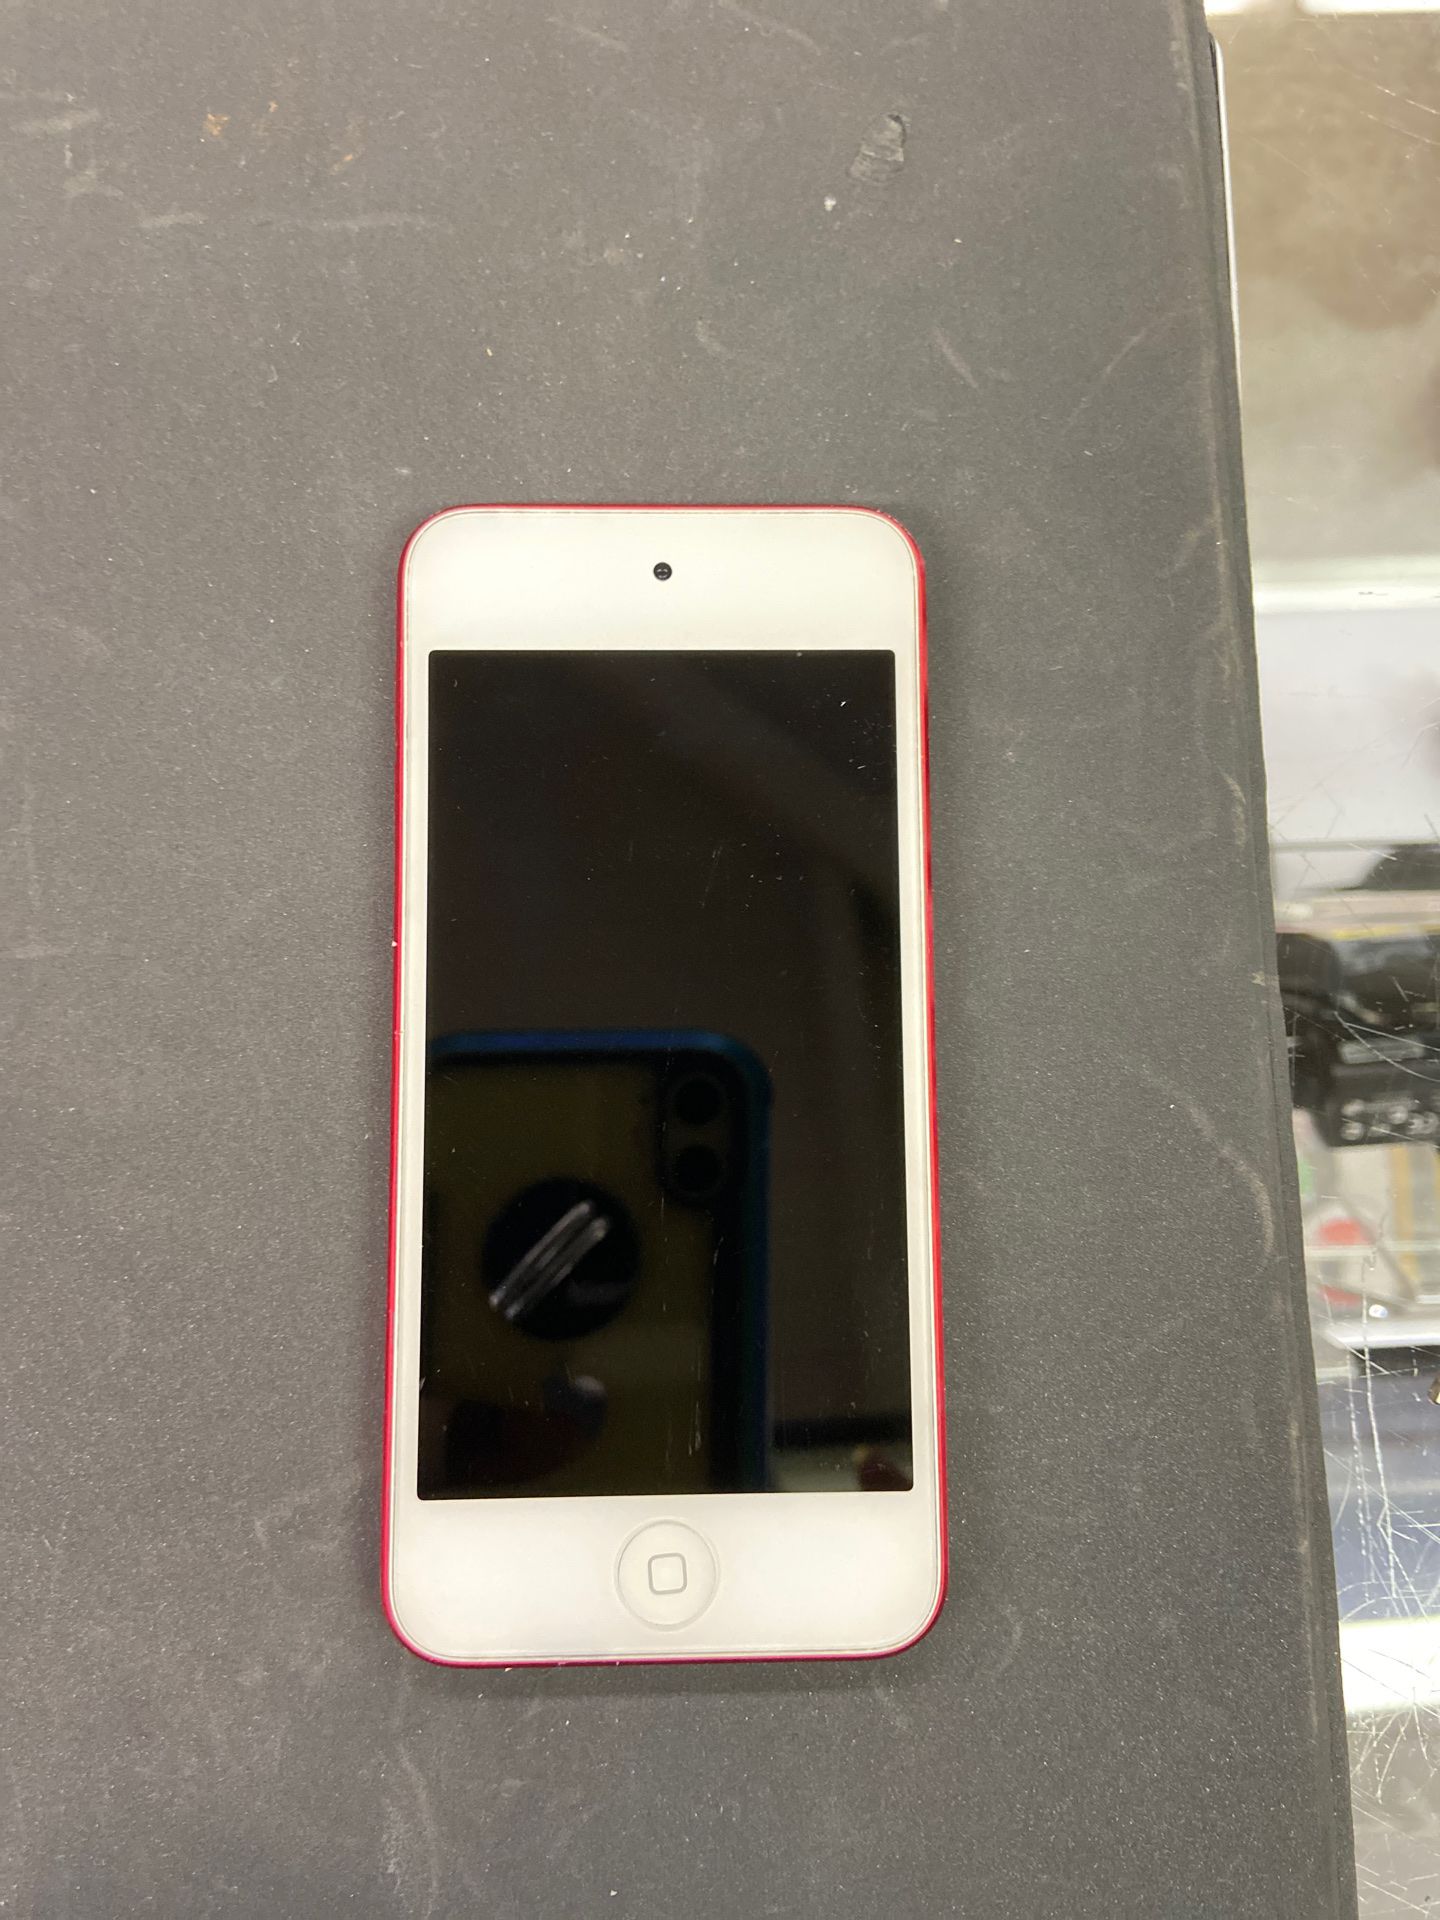 Red Apple iPod